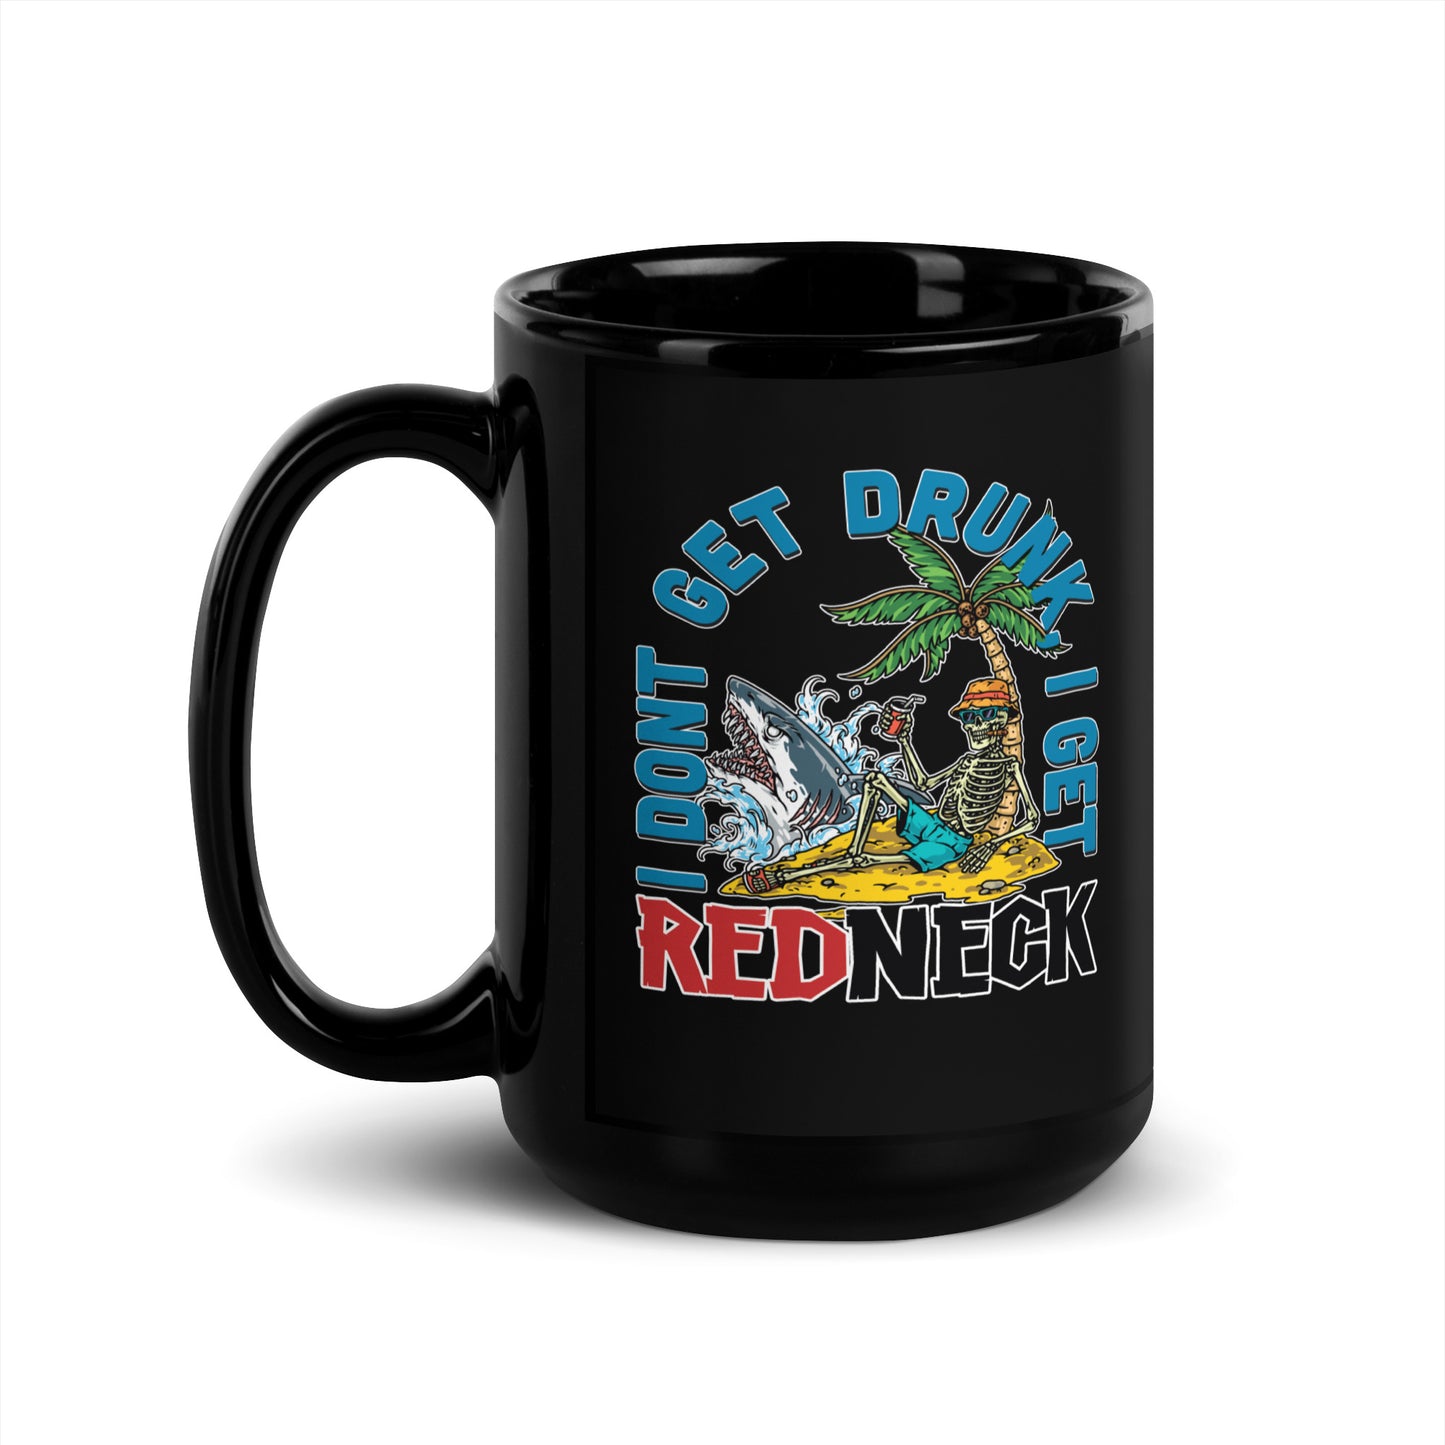 Get Redneck Coffee Mug